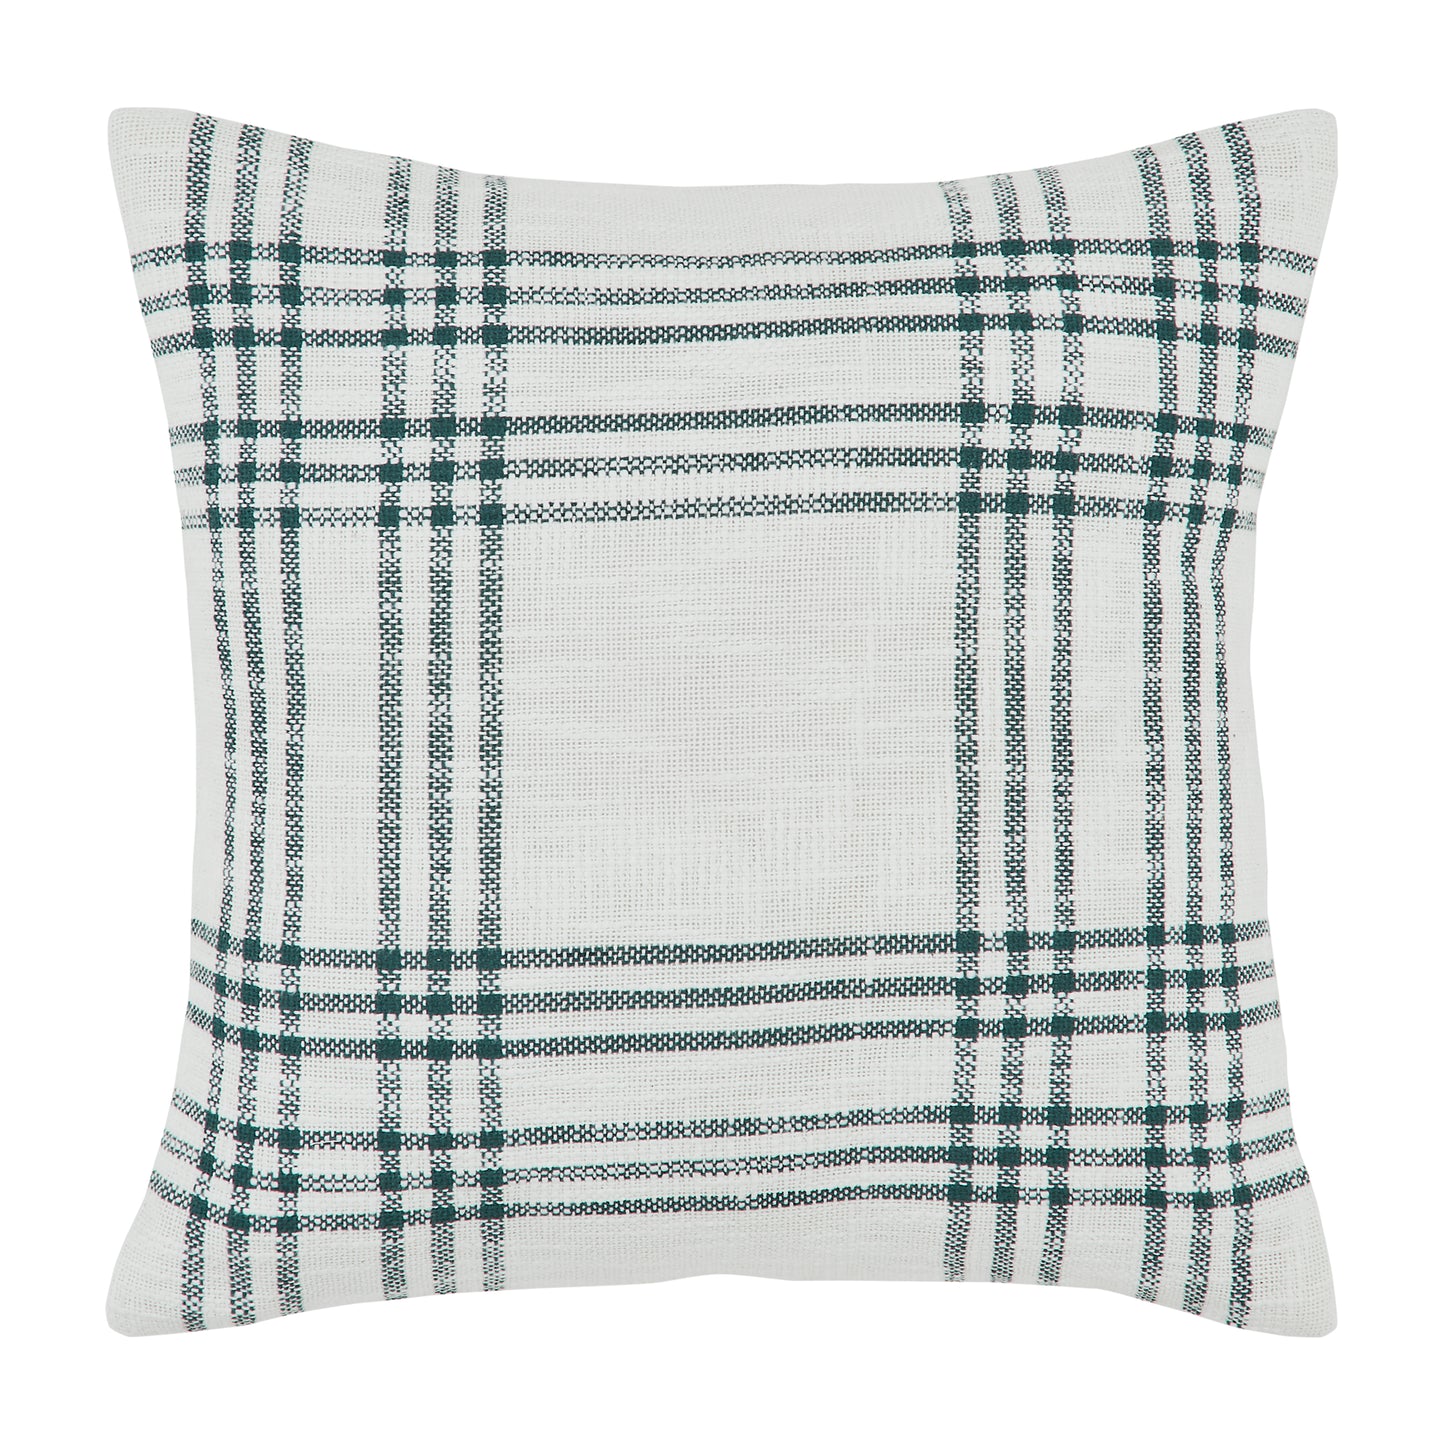 80414-Pine-Grove-Plaid-Fabric-Pillow-18x18-image-3